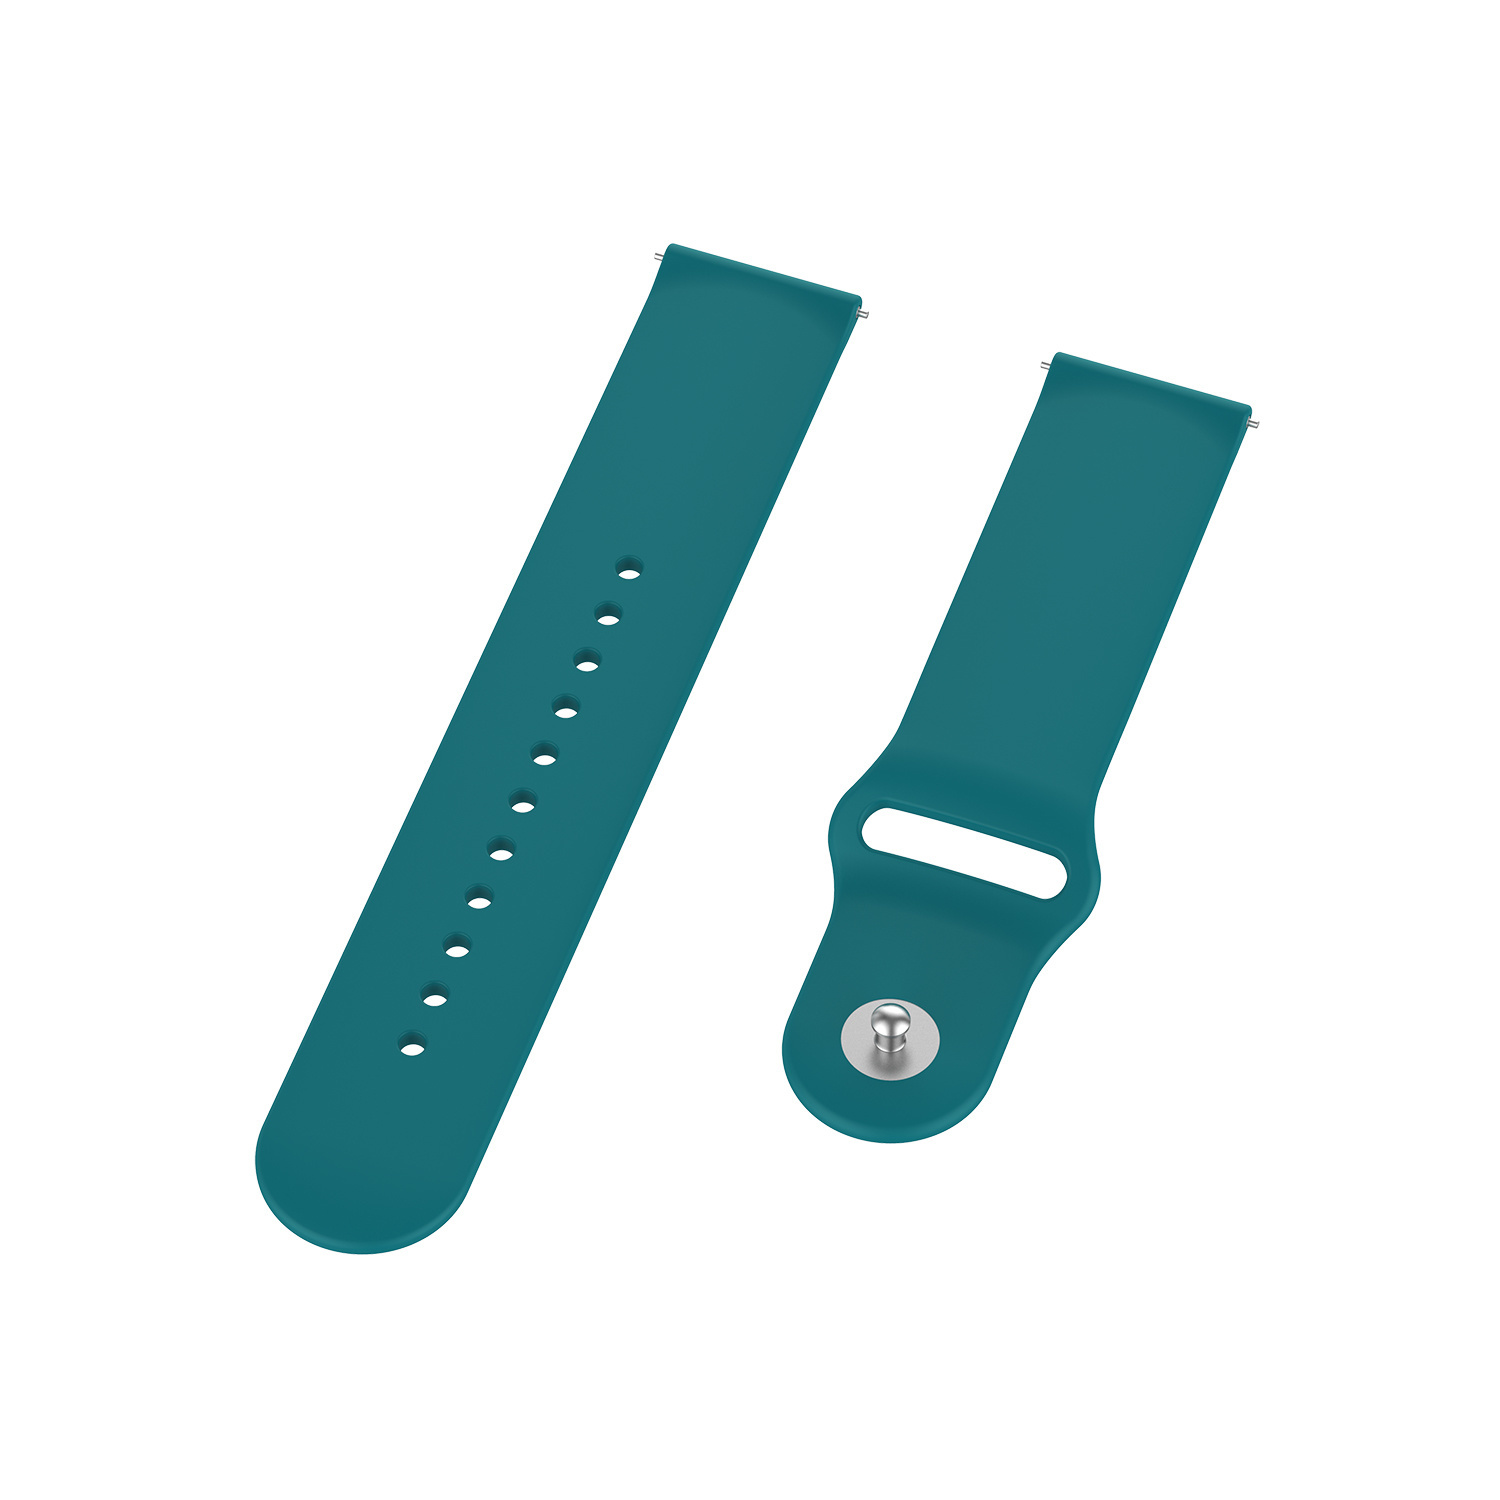 Huawei Watch GT silicone sport band - groen